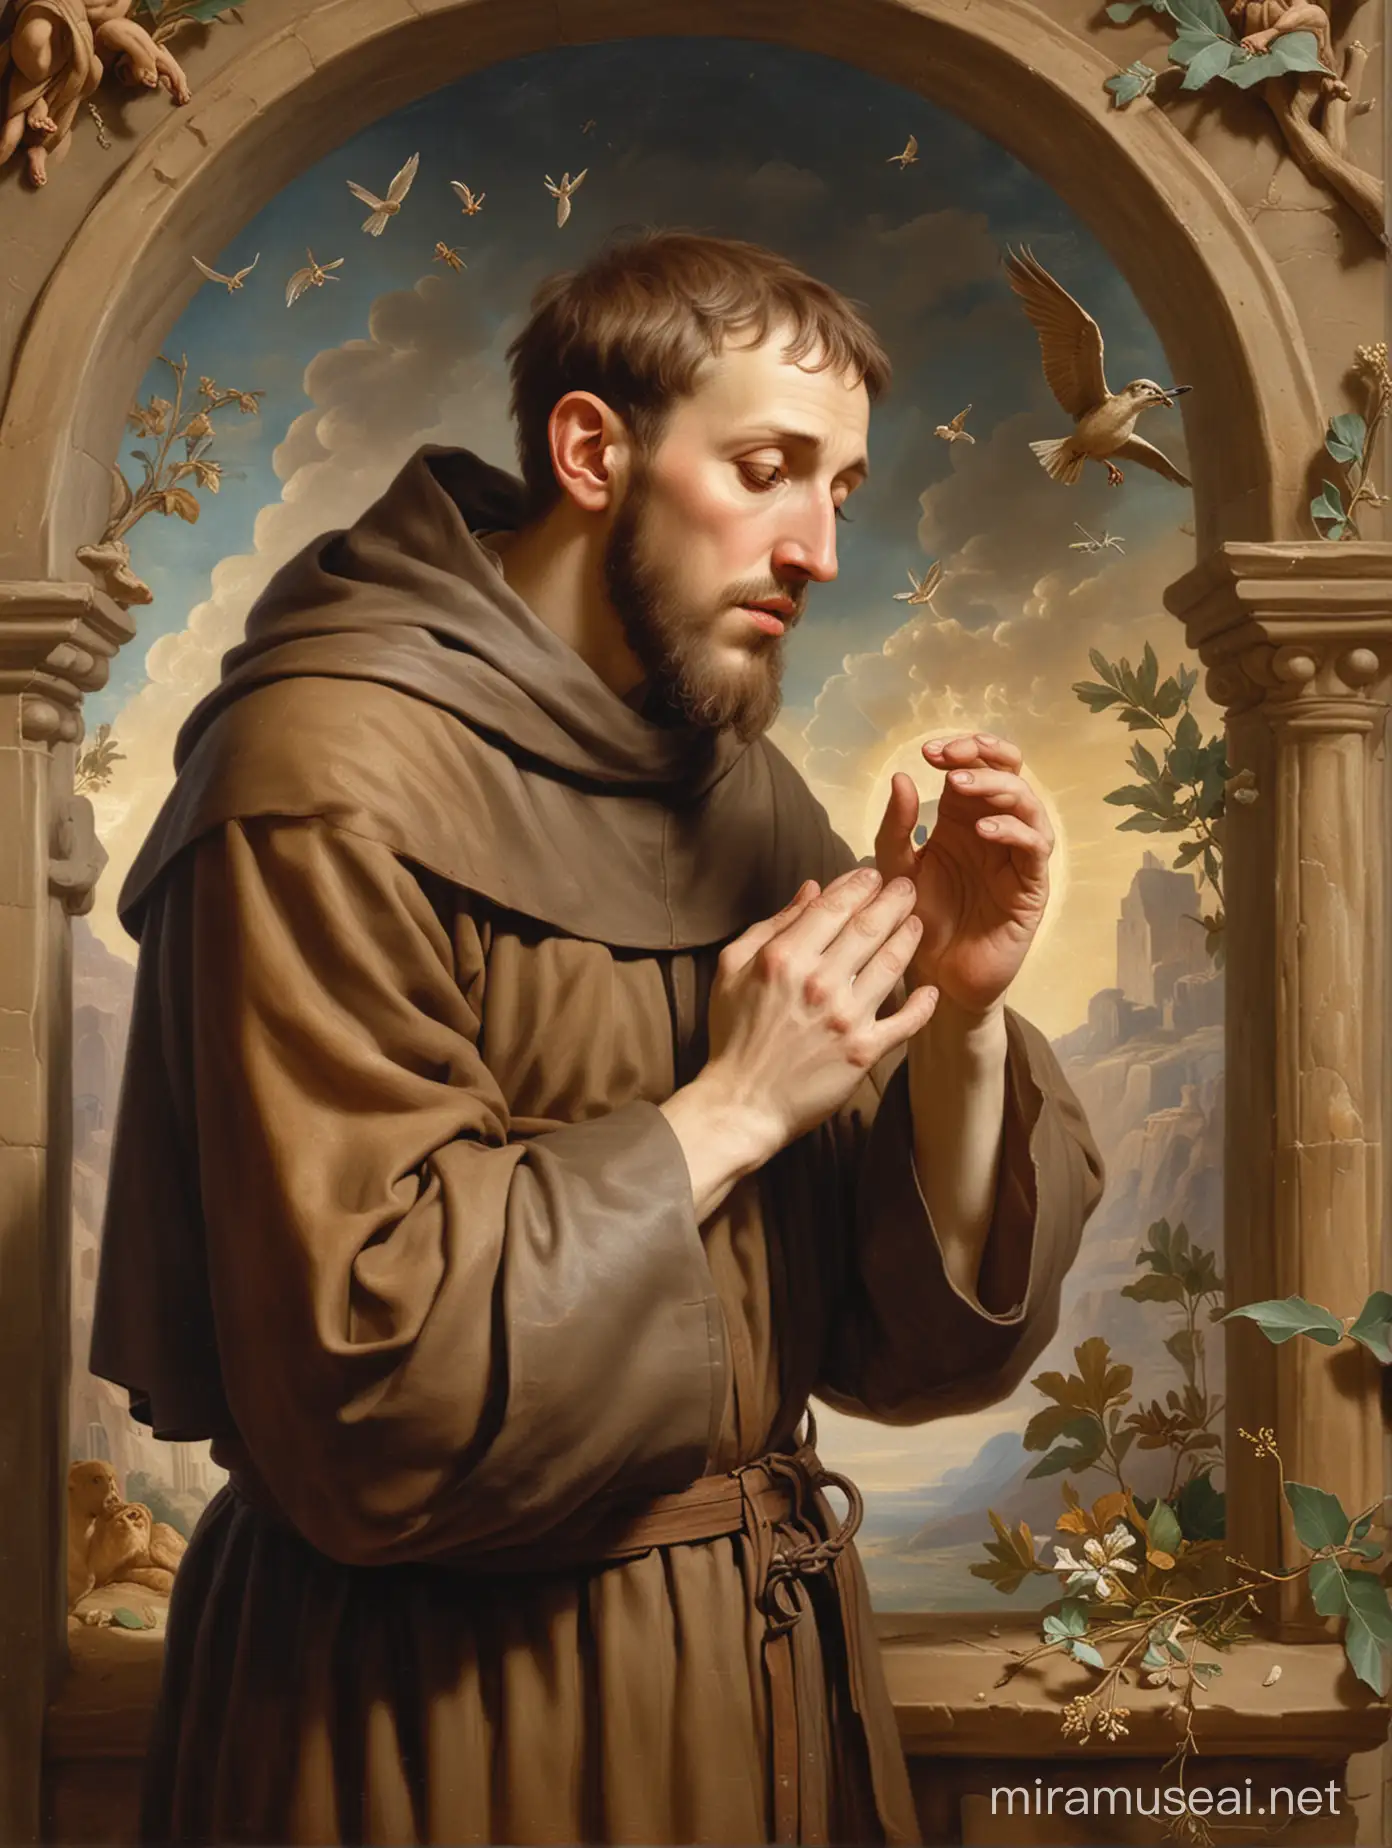 Saint Francis of Assisi praying